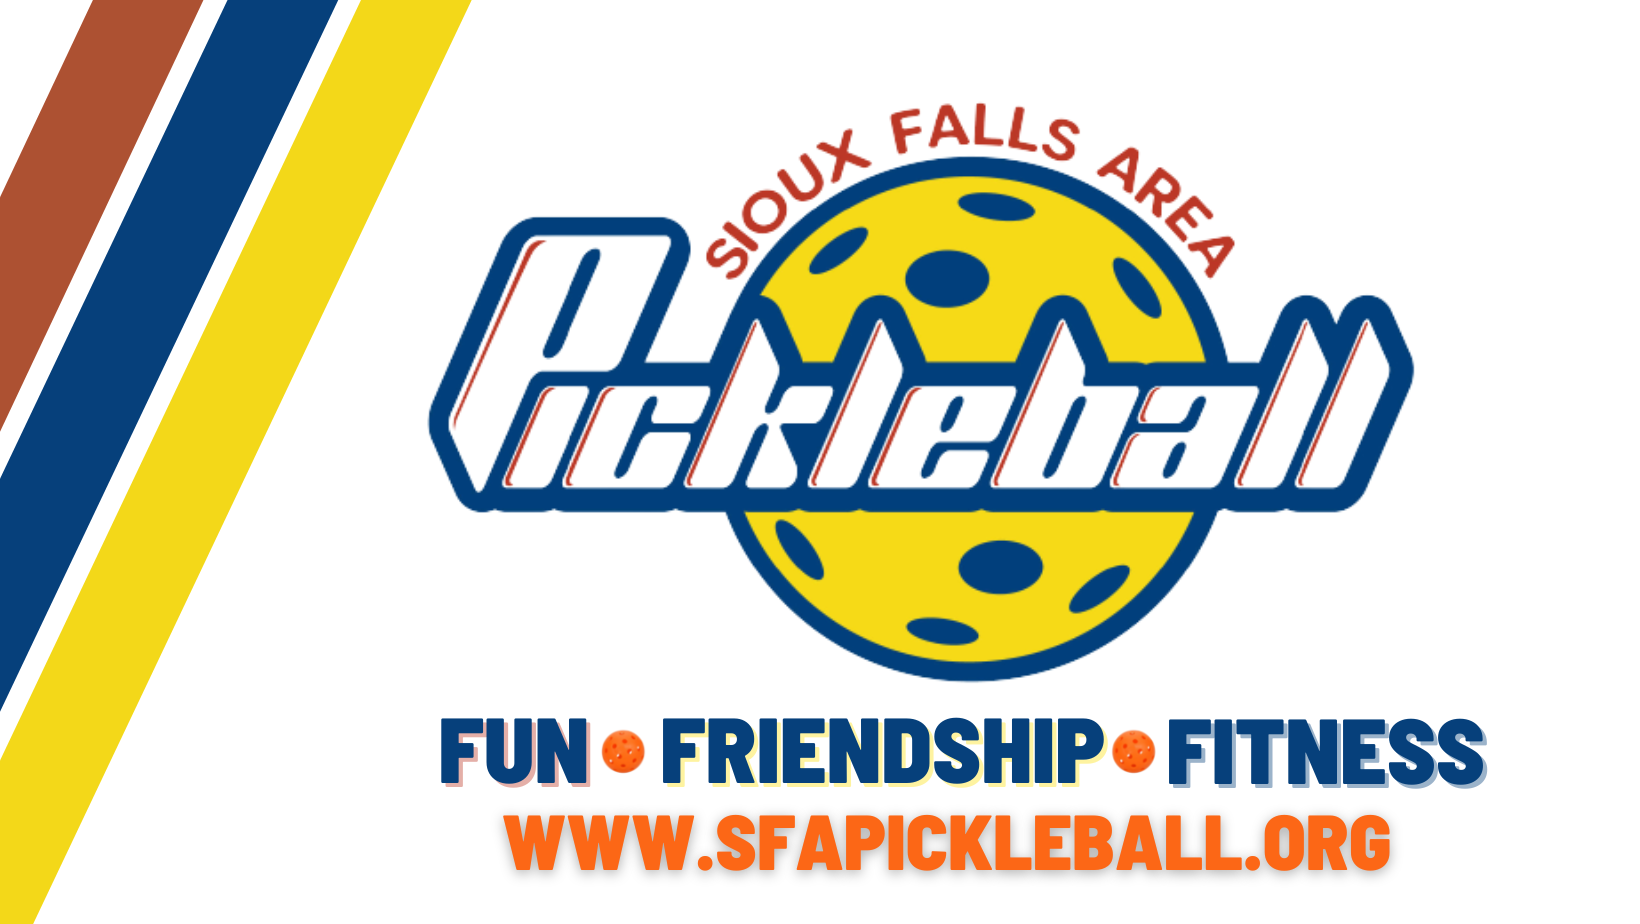 USA Pickleball Unveils New Golden Ticket Tournament Format and Schedule